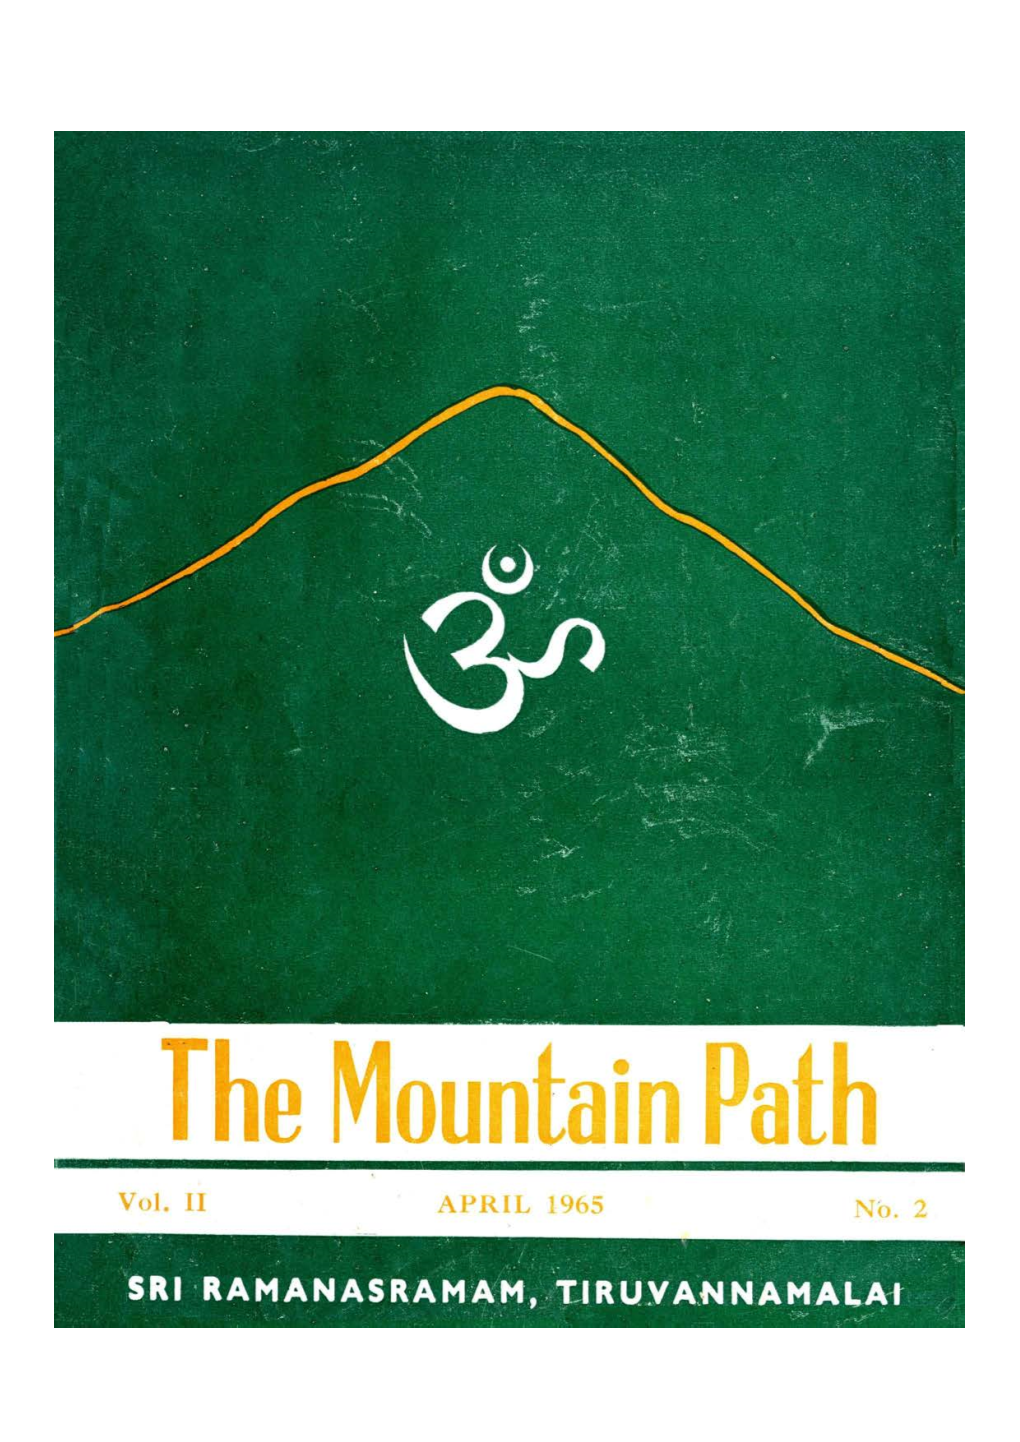 The Mountain Path Vol. 2 No. 2, April 1965